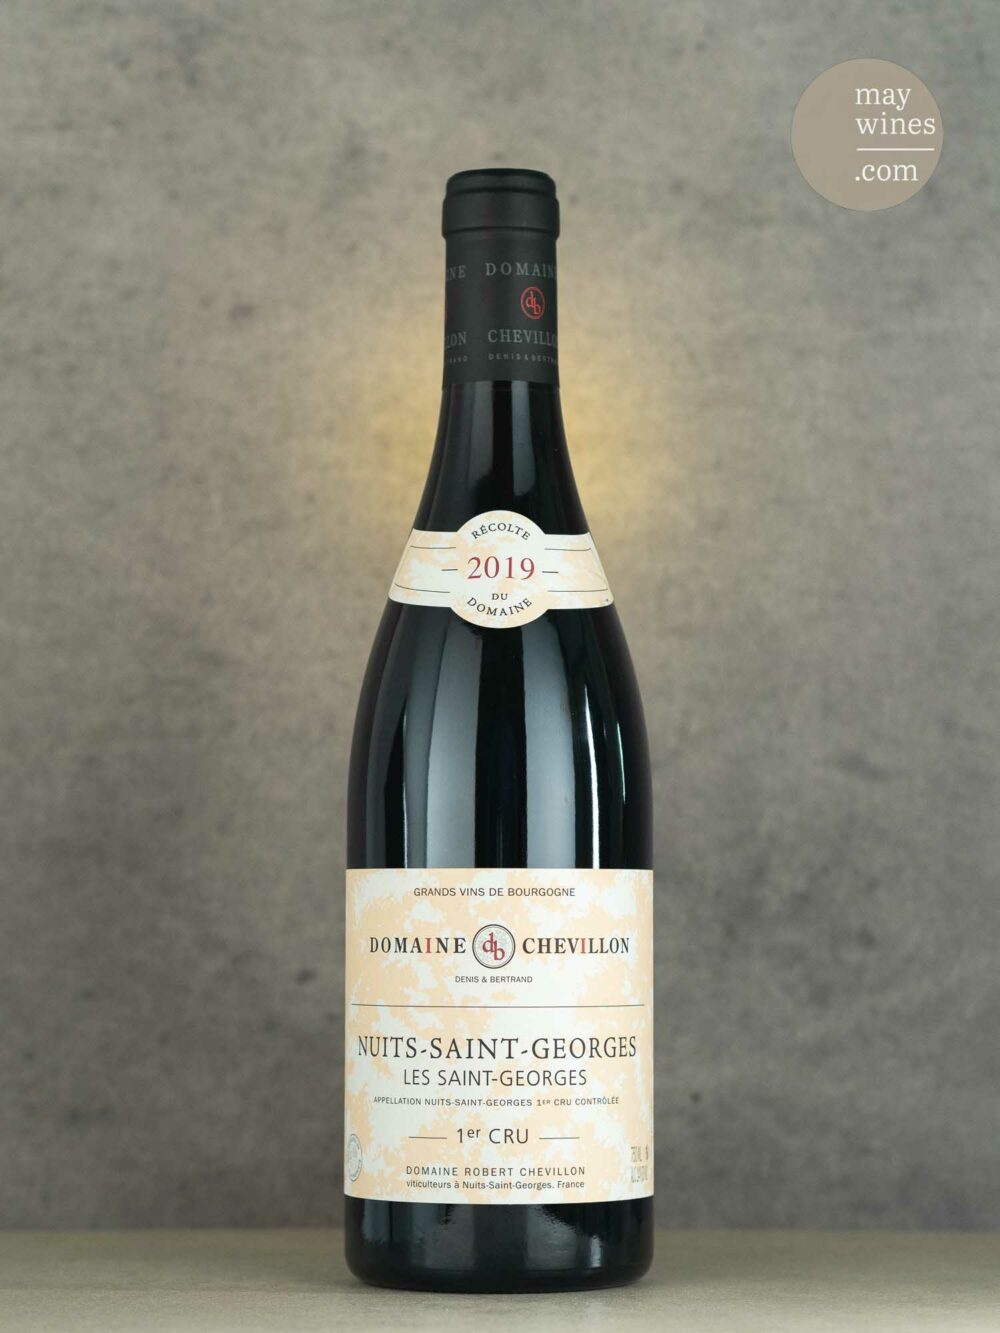 May Wines – Rotwein – 2019 Nuits-Saint-Georges Les Saint-Georges Premier Cru - Domaine Robert Chevillon